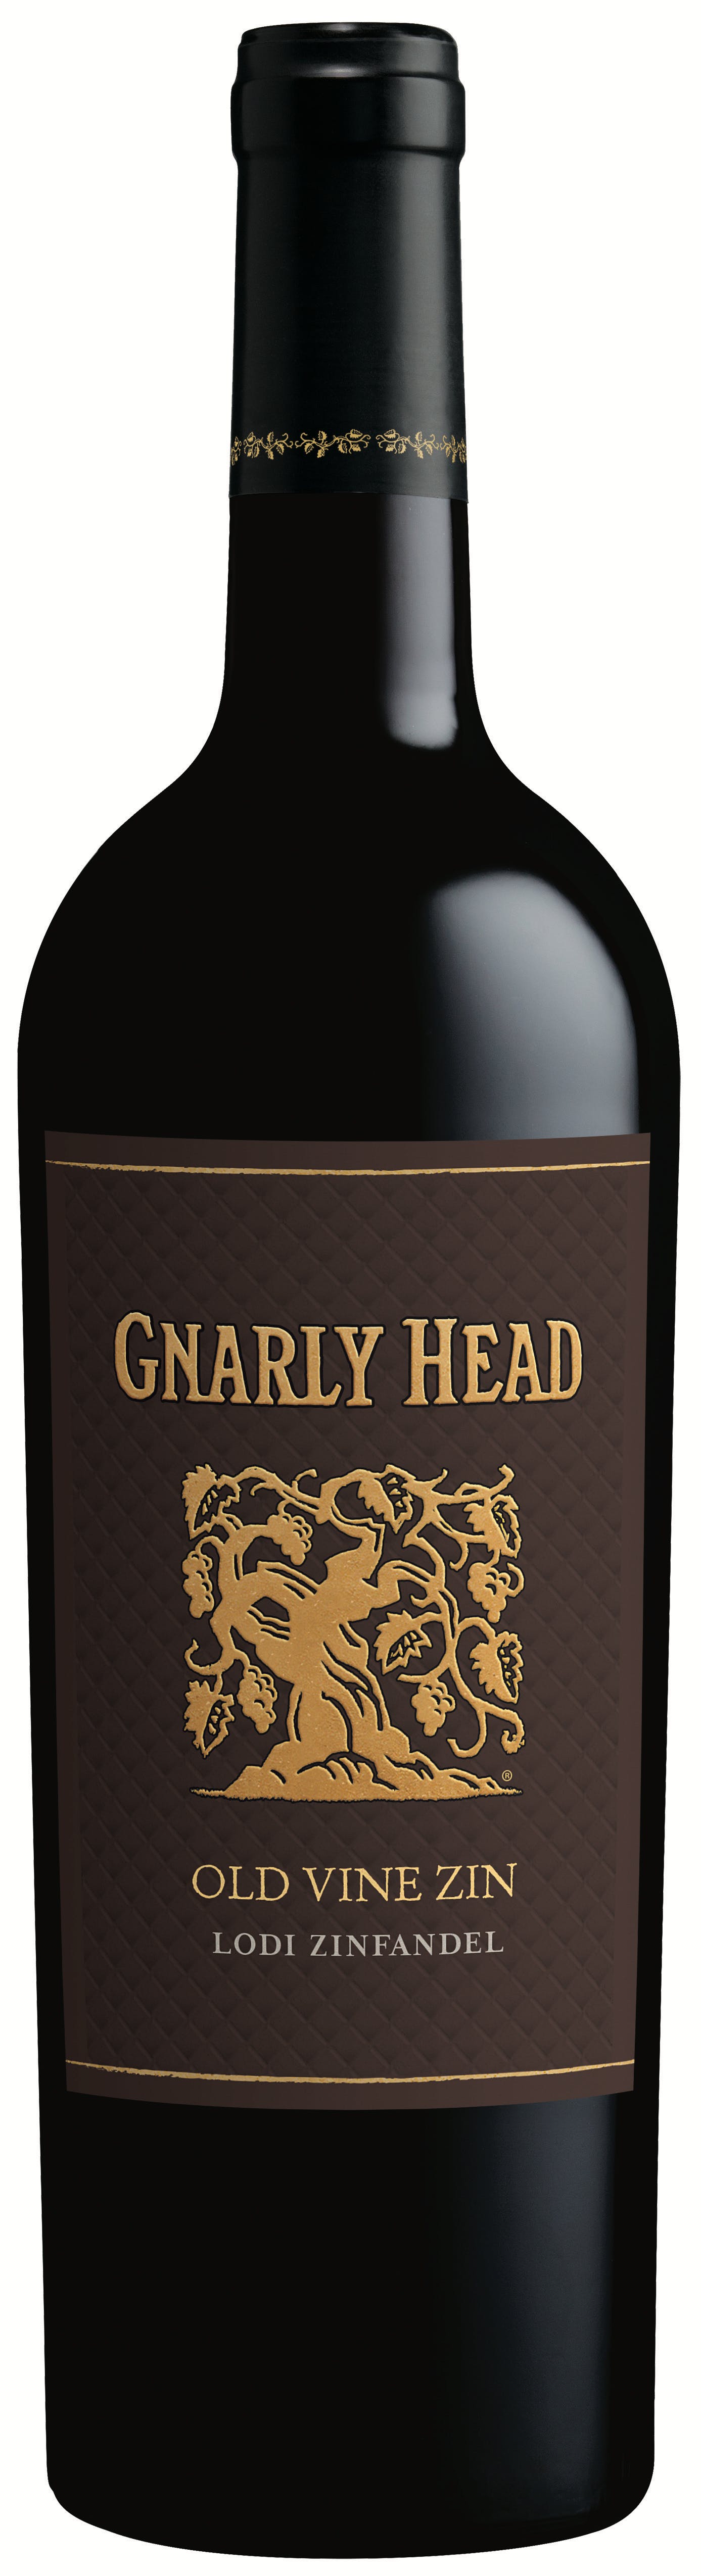 images/wine/Red Wine/Gnarly Head Old Vine Zinfandel.jpg